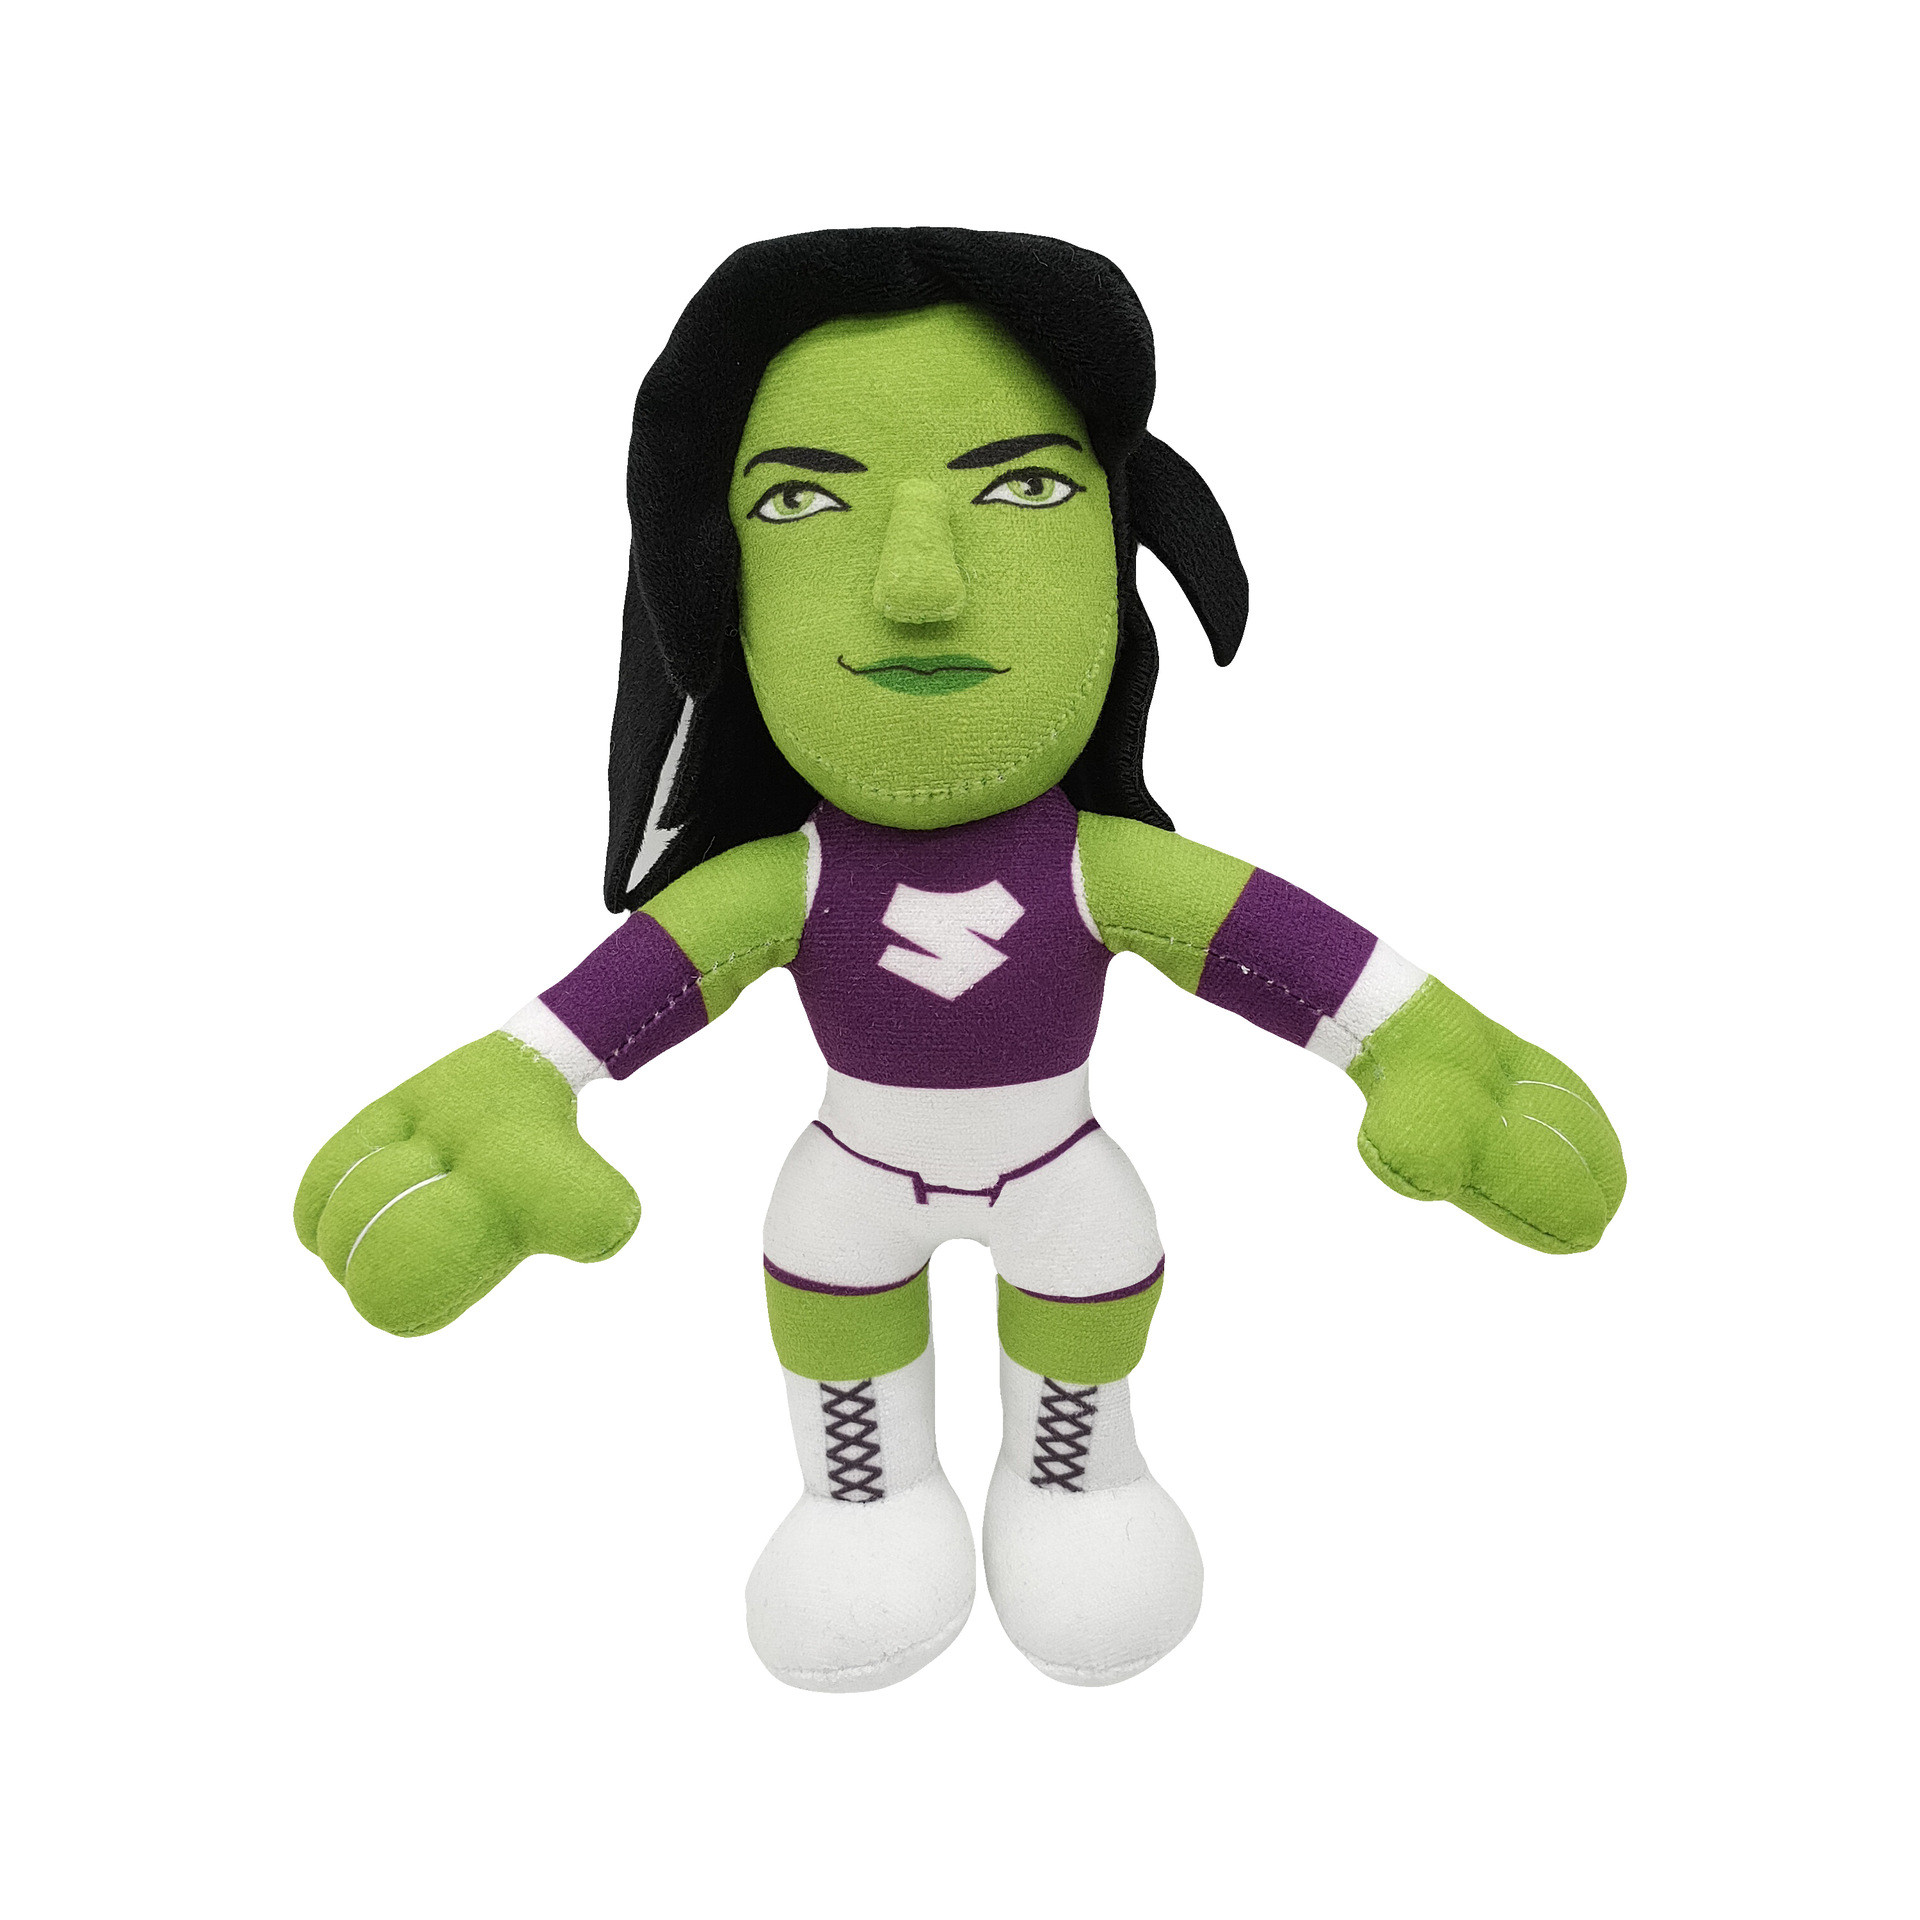 She Hulk Plush Toy